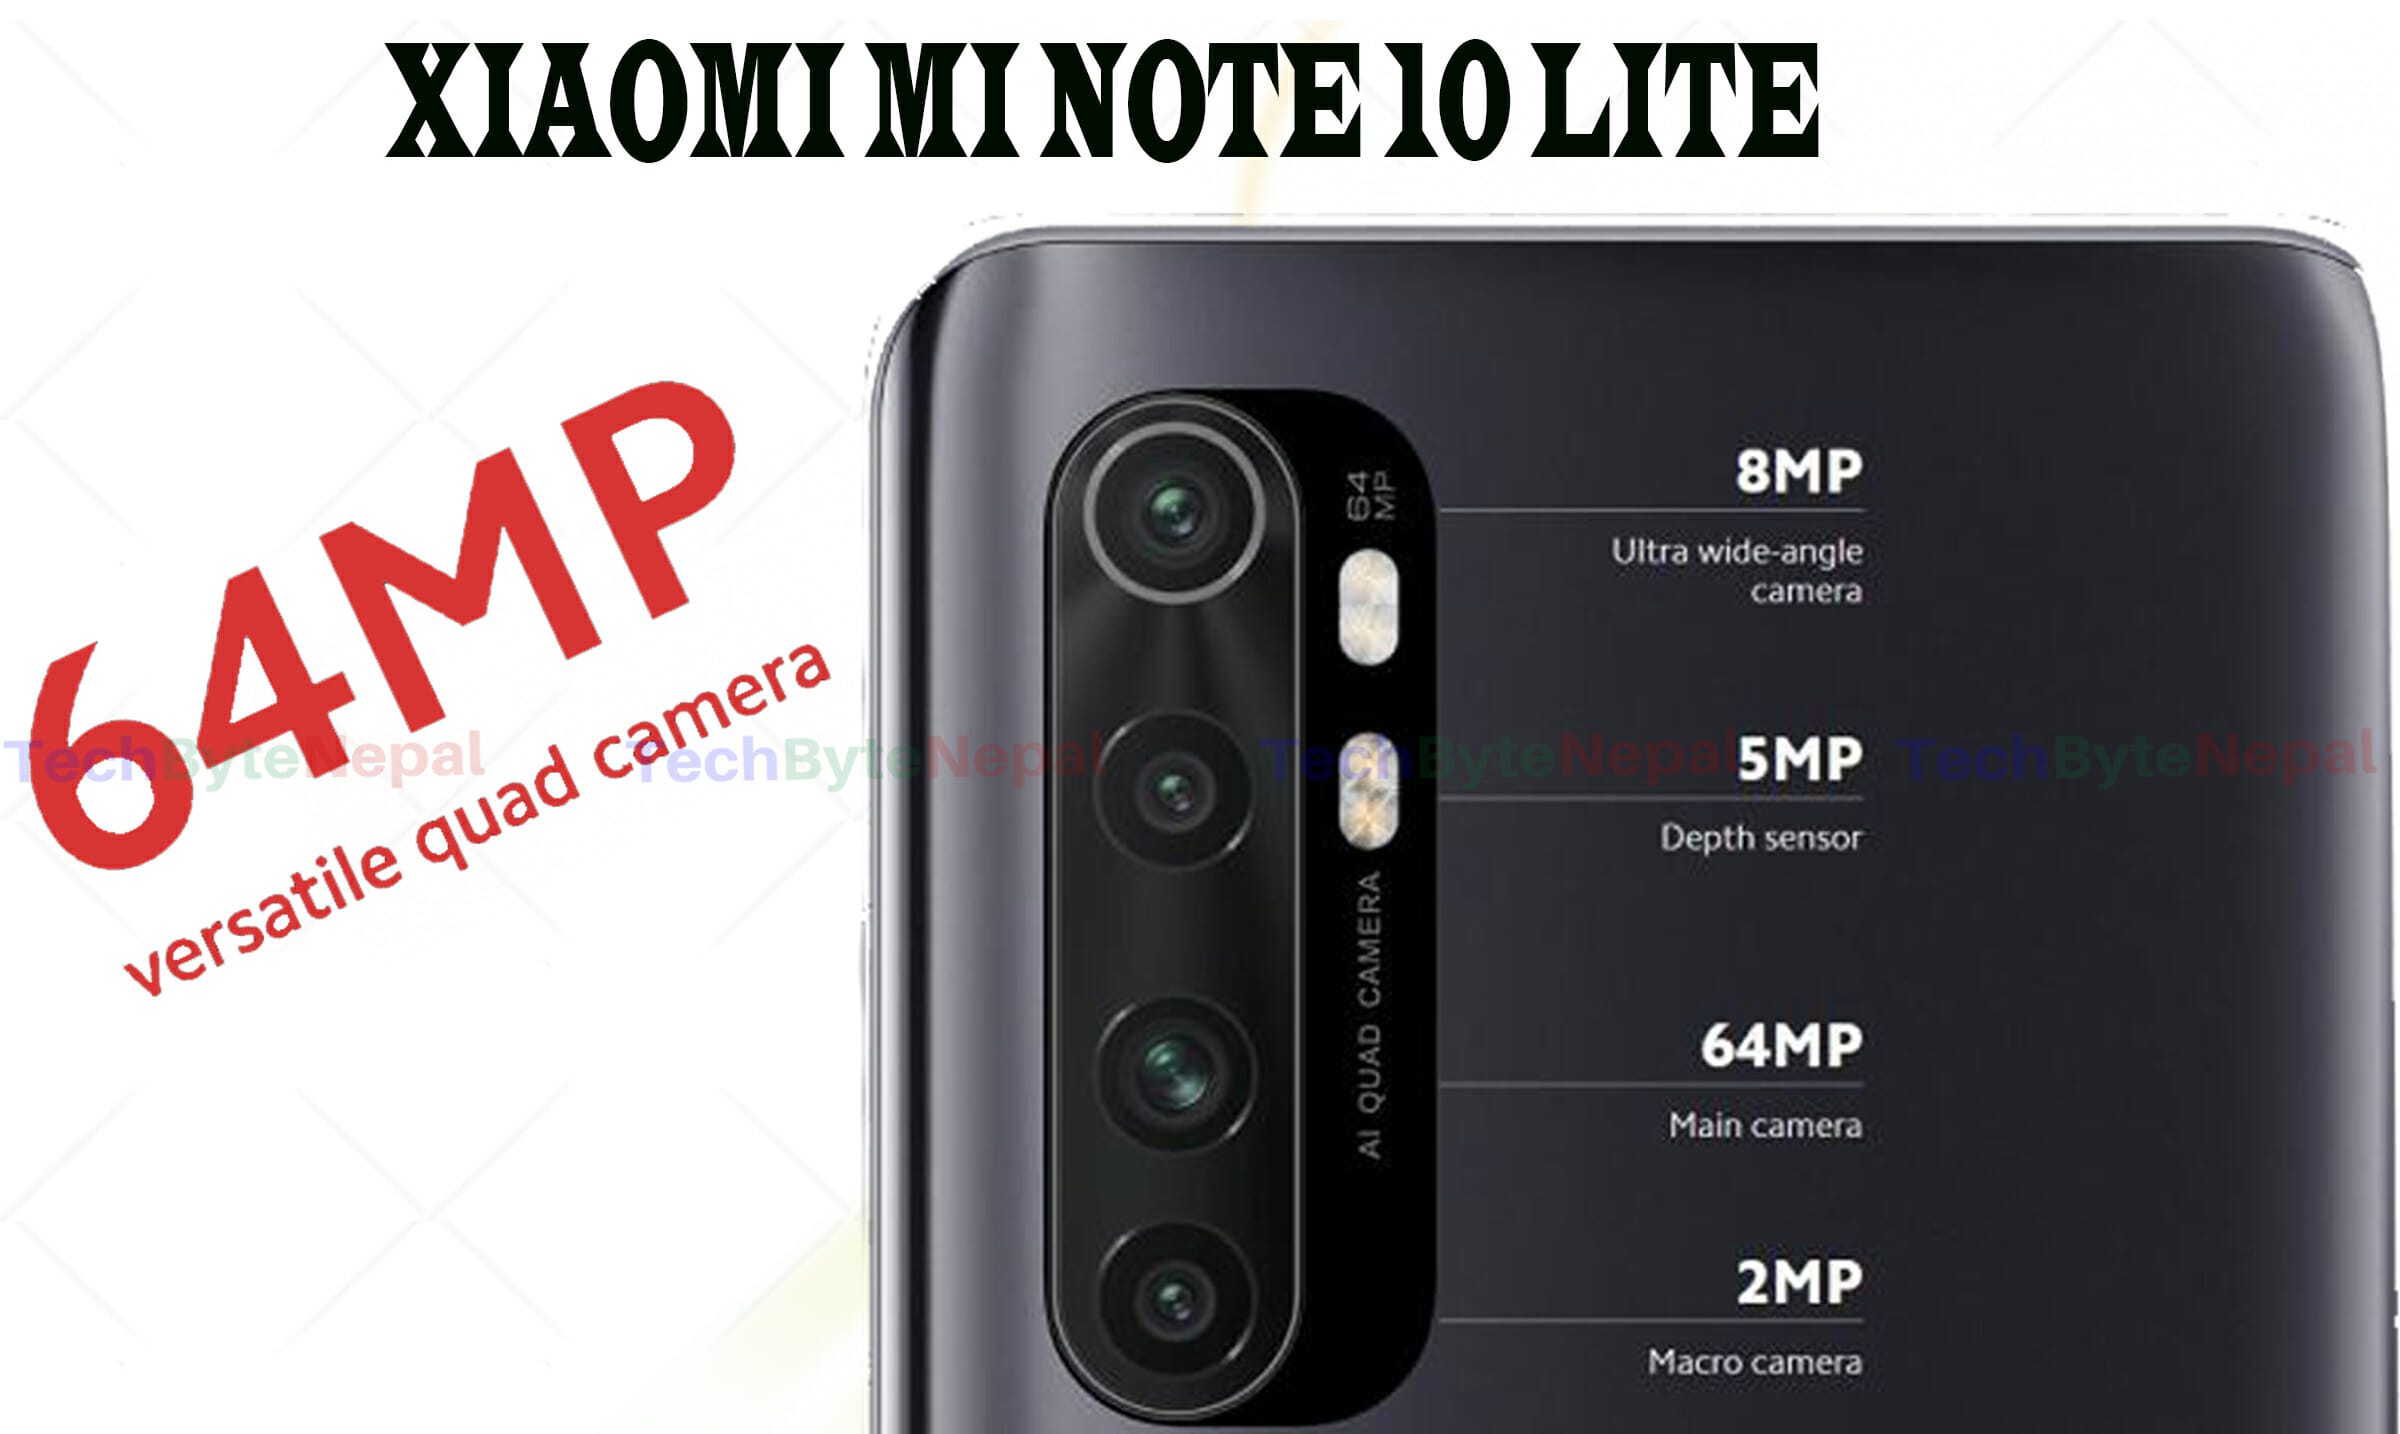 MI Note 10 Lite 64MP Quad Camera Mobile Phone